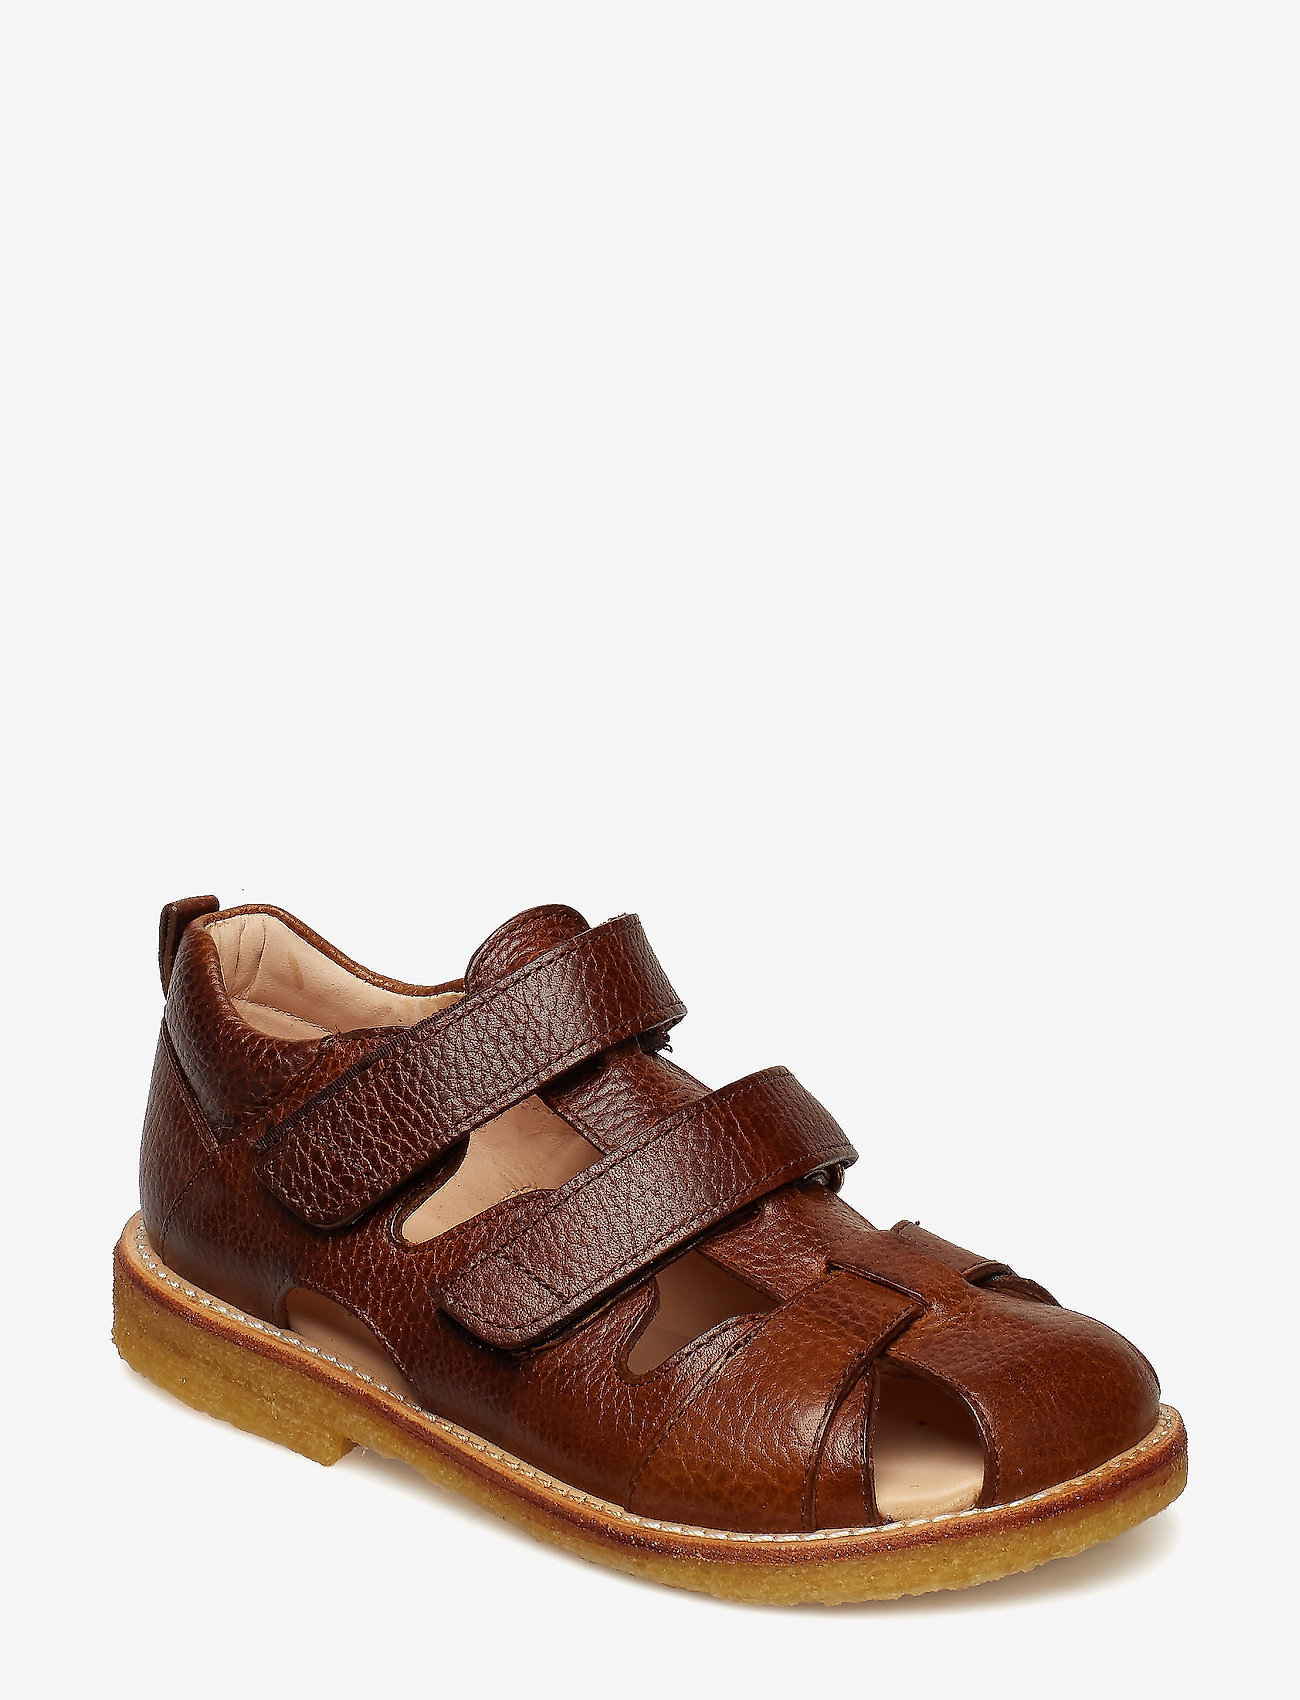 ANGULUS - Sandals - flat - closed toe - - strap sandals - 2509 cognac - 0